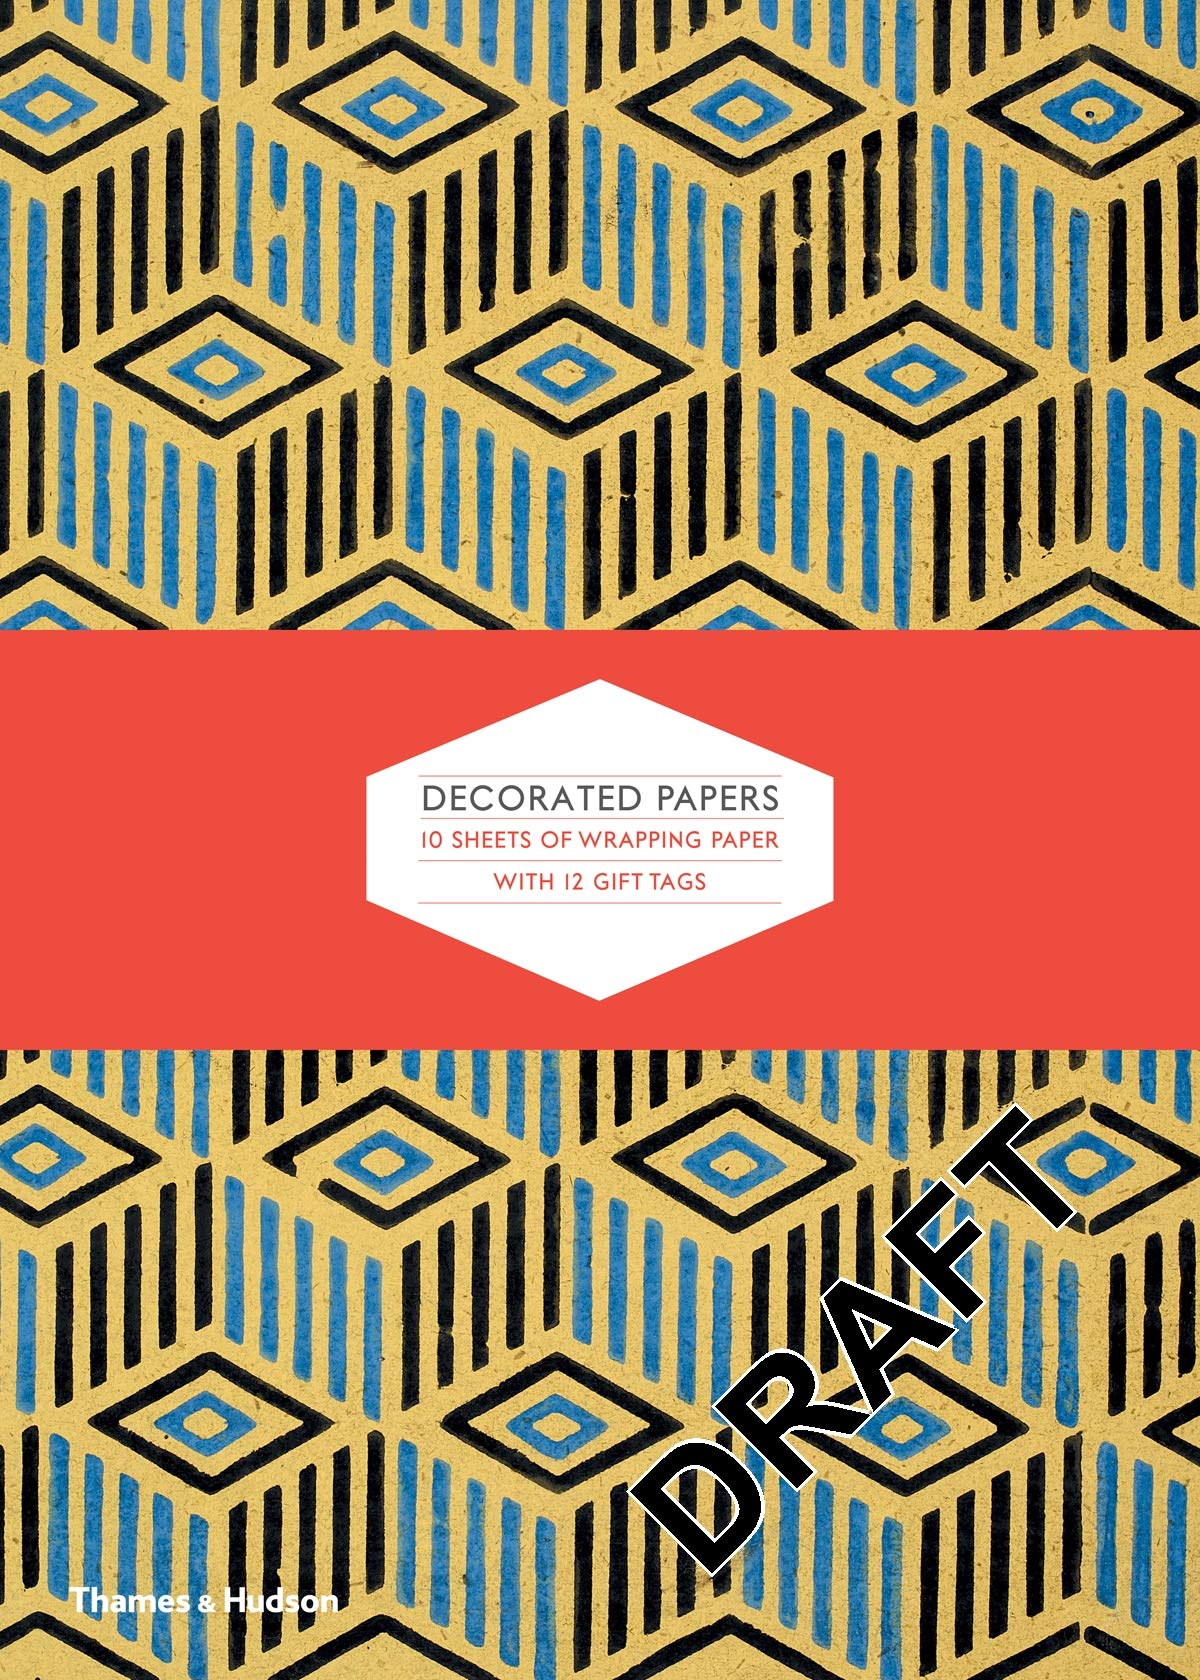 Decorated Papers - Hartie de impachetat - Modele diferite | P.J.M. Marks image1